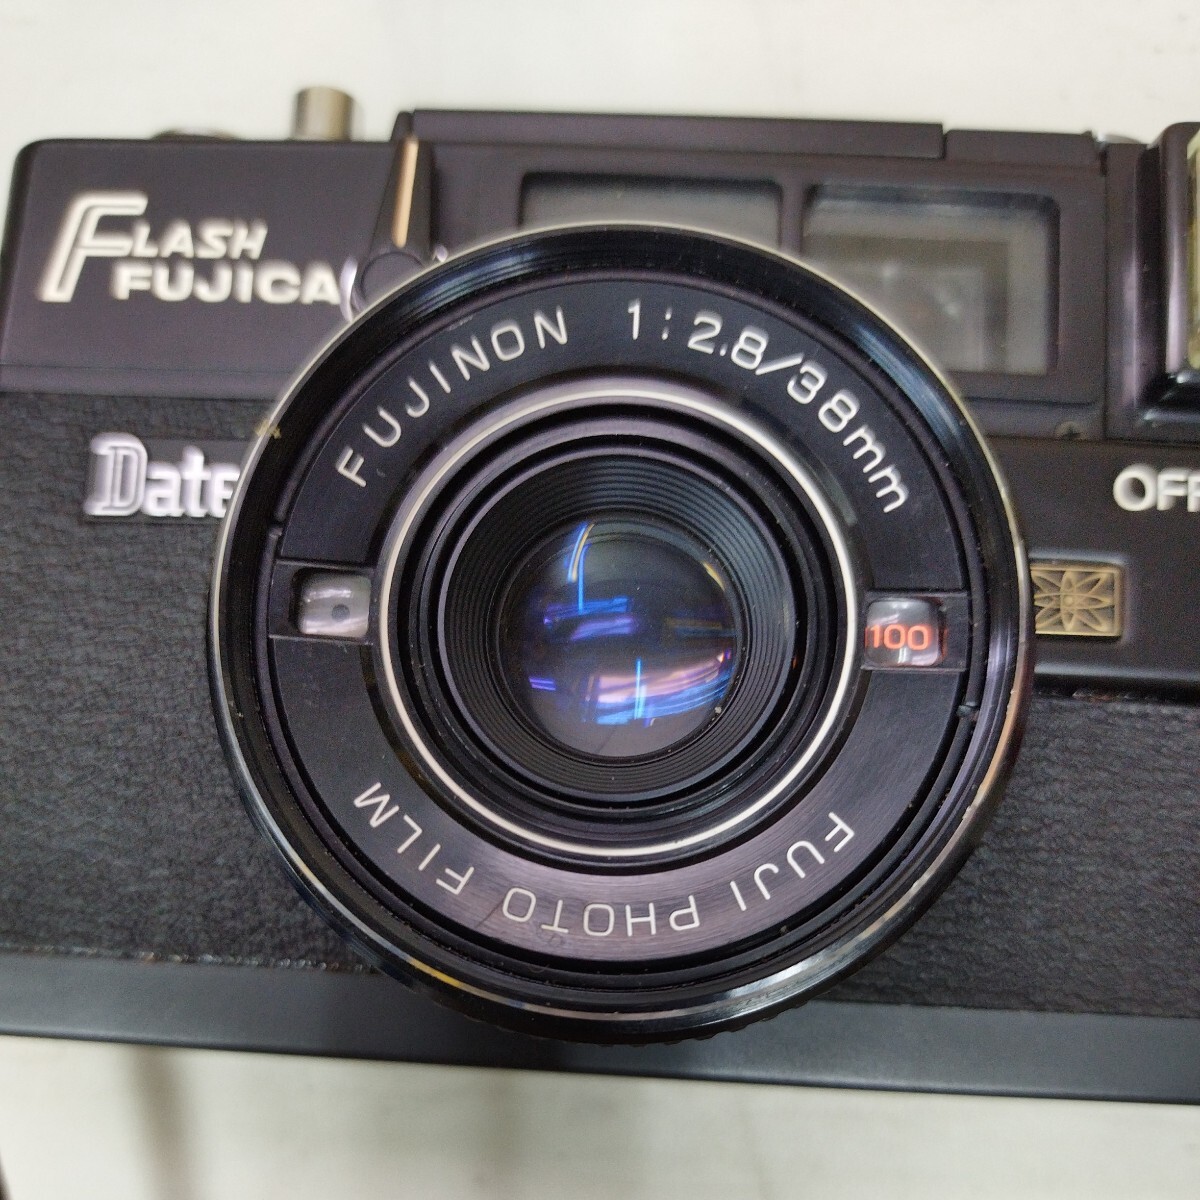 FUJICA FLASH Date フジカ コンパクトカメラ フィルムカメラ 未確認 4628の画像6